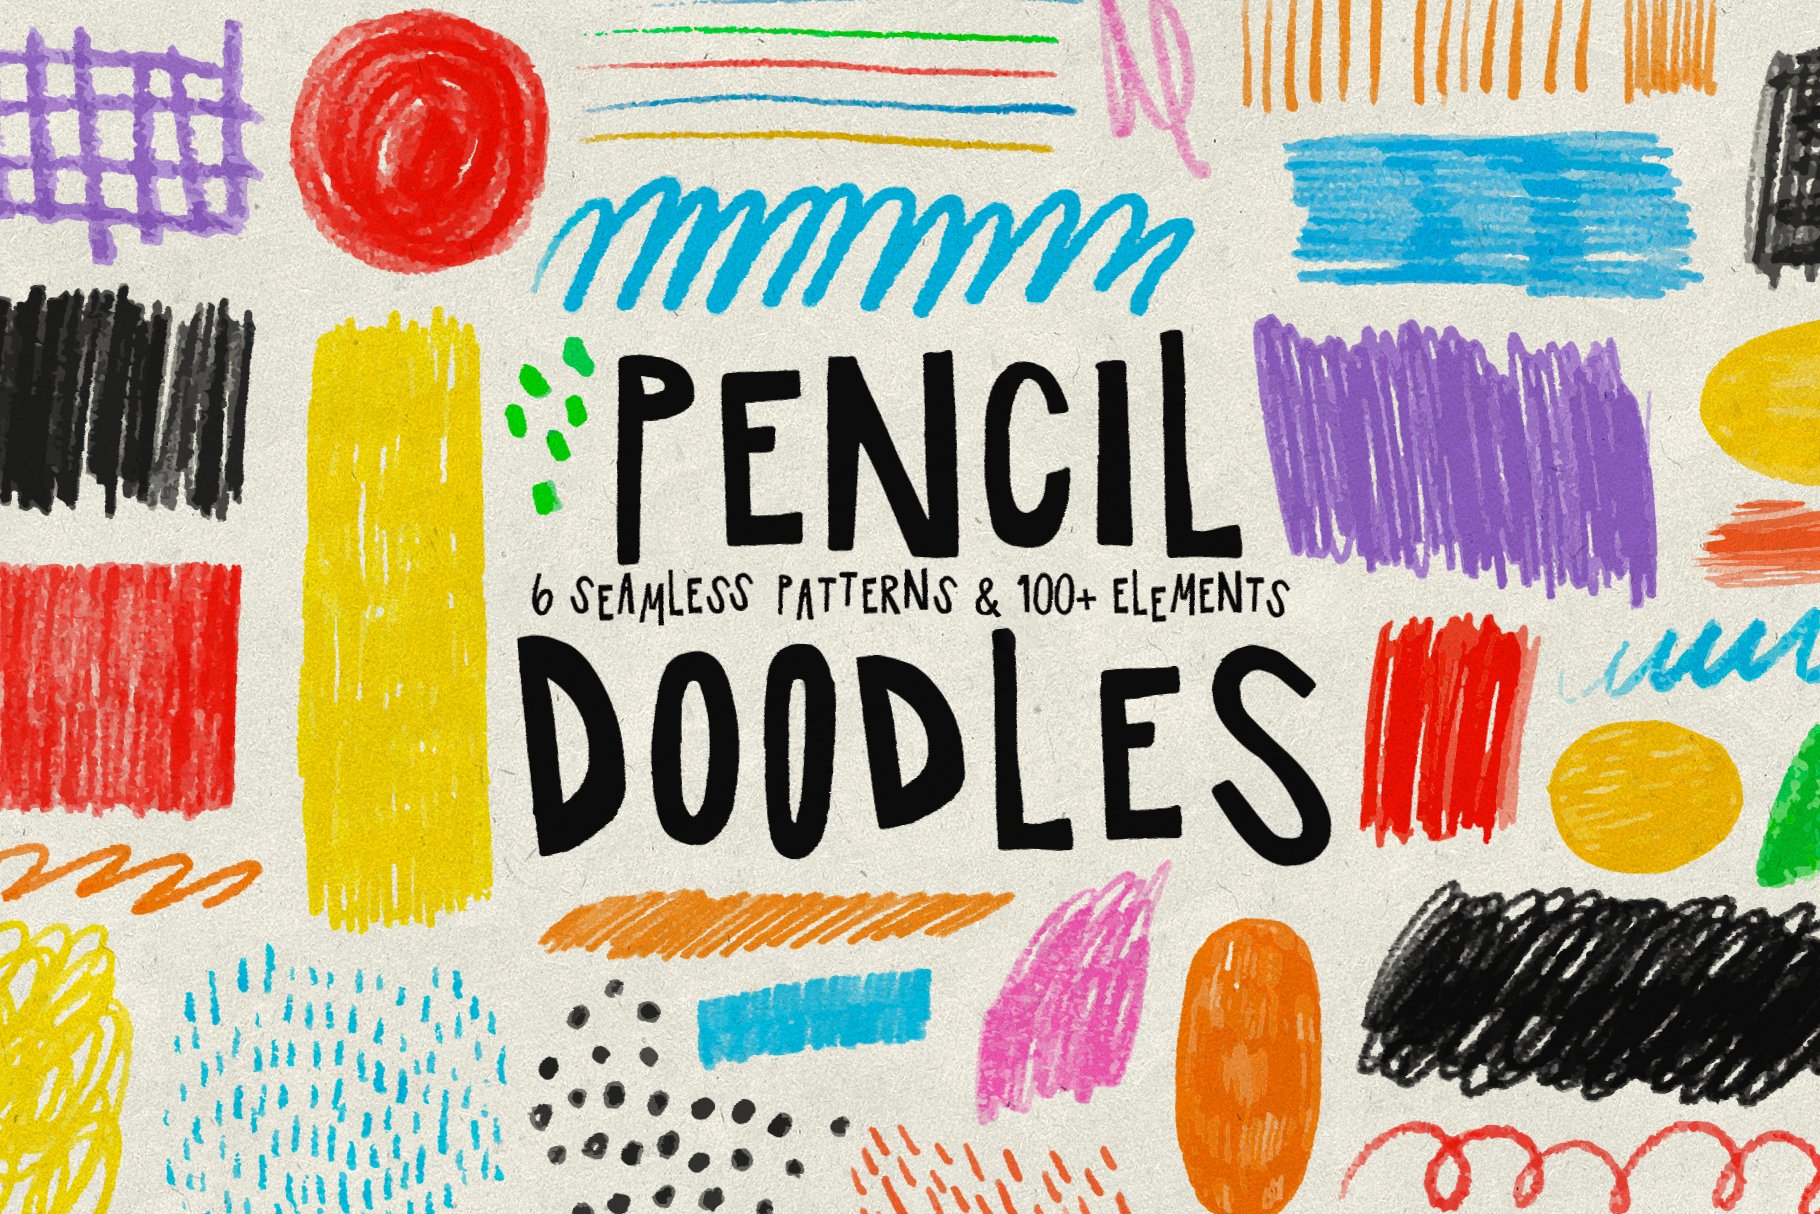 Pencil Doodles: Shapes + Patterns cover image.